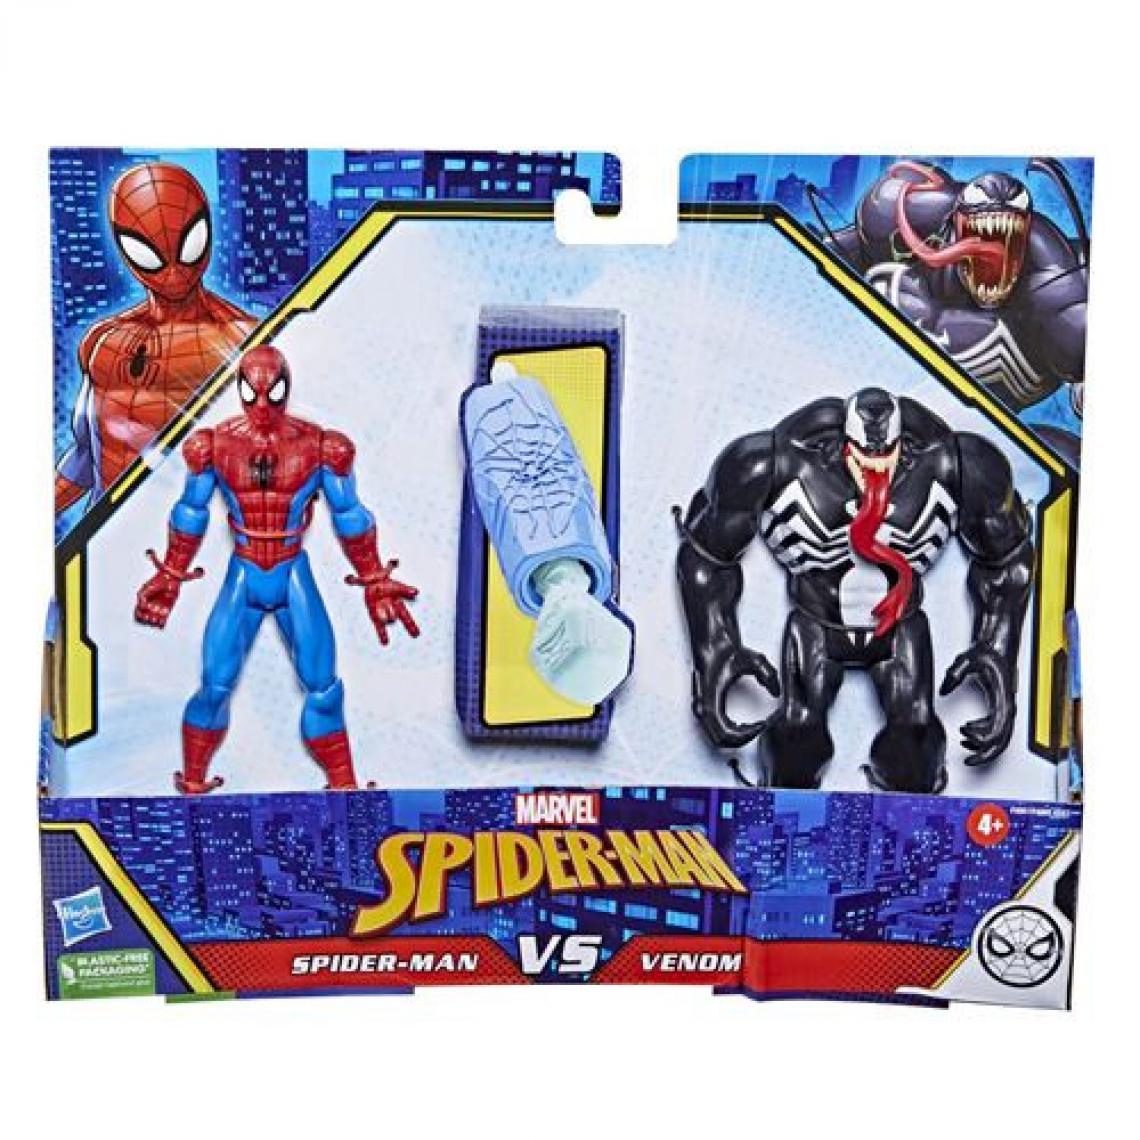 Spiderman - Figurine Spiderman Marvel Spiderman versus Venom - Animaux